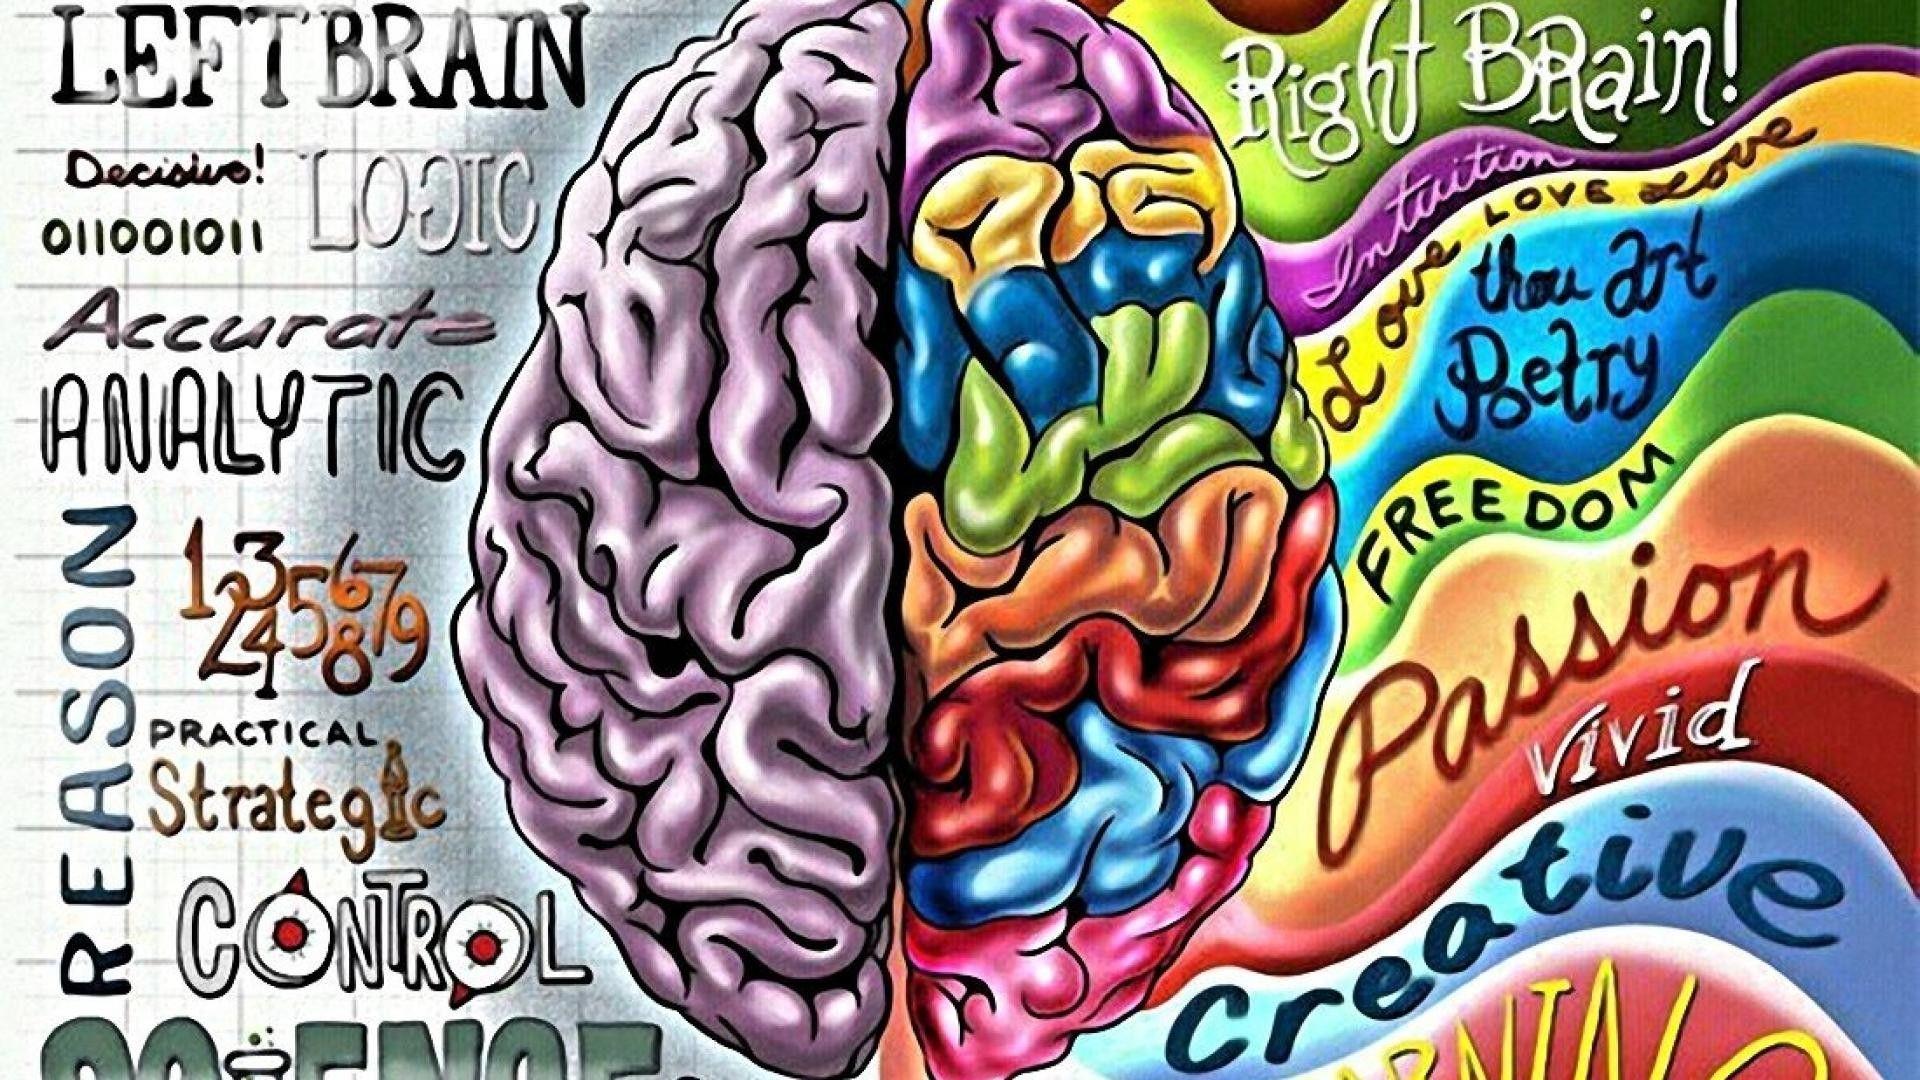 Mega Brain Wallpaper Inspirational Brain Wallpaper